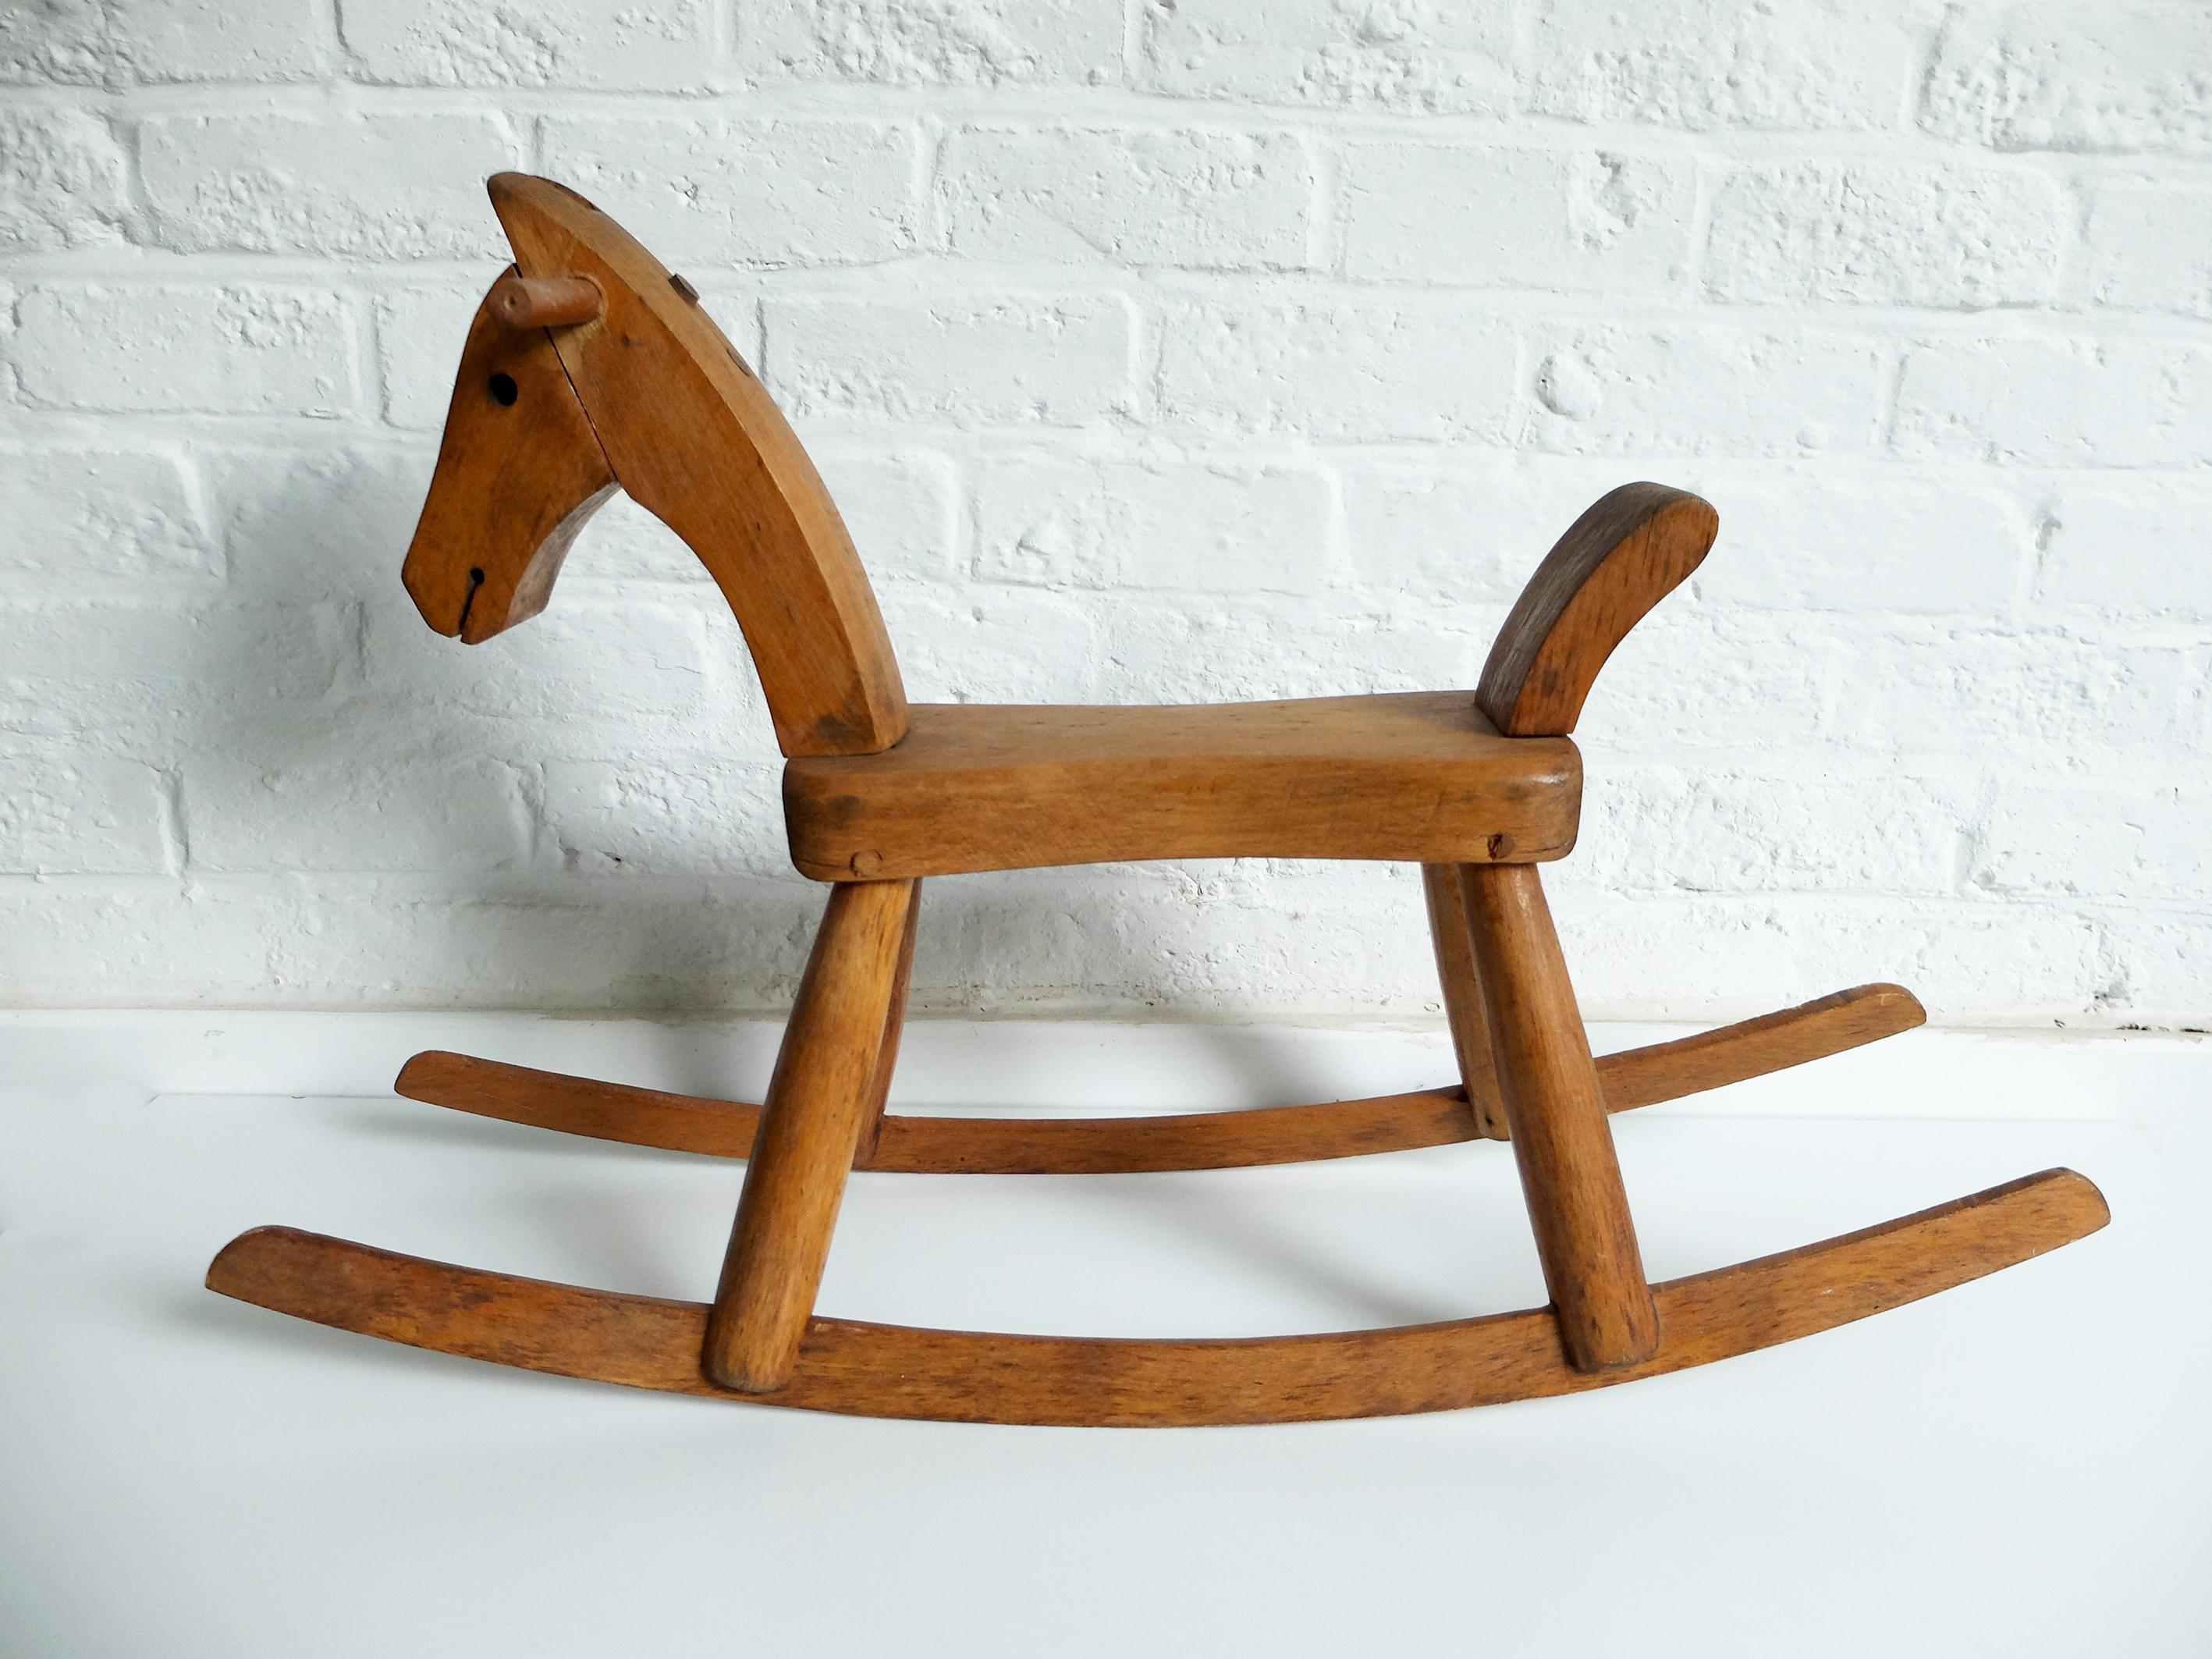 Beech Scandinavian Vintage Rocking Horse in wood by Kay Bojesen, Denmark, 1950s